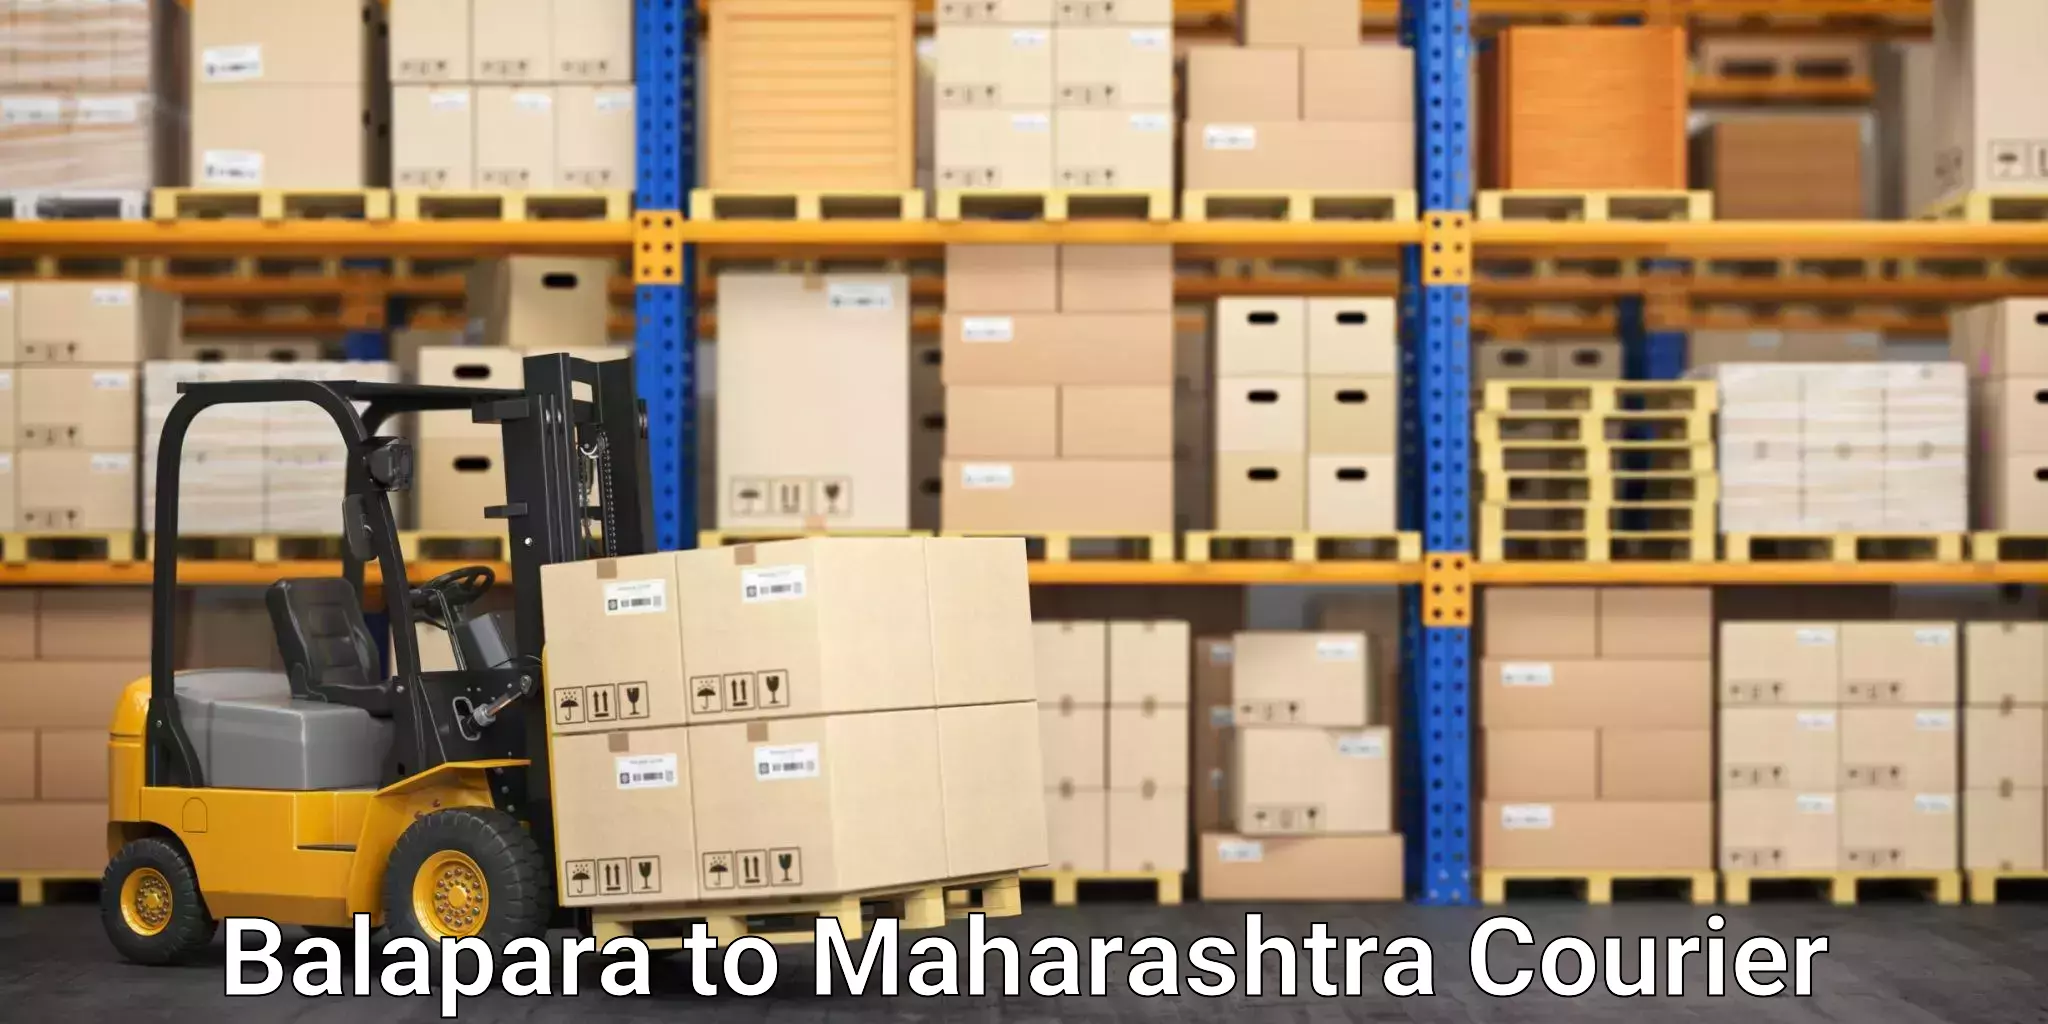 Cash on delivery service Balapara to Mumbai Port